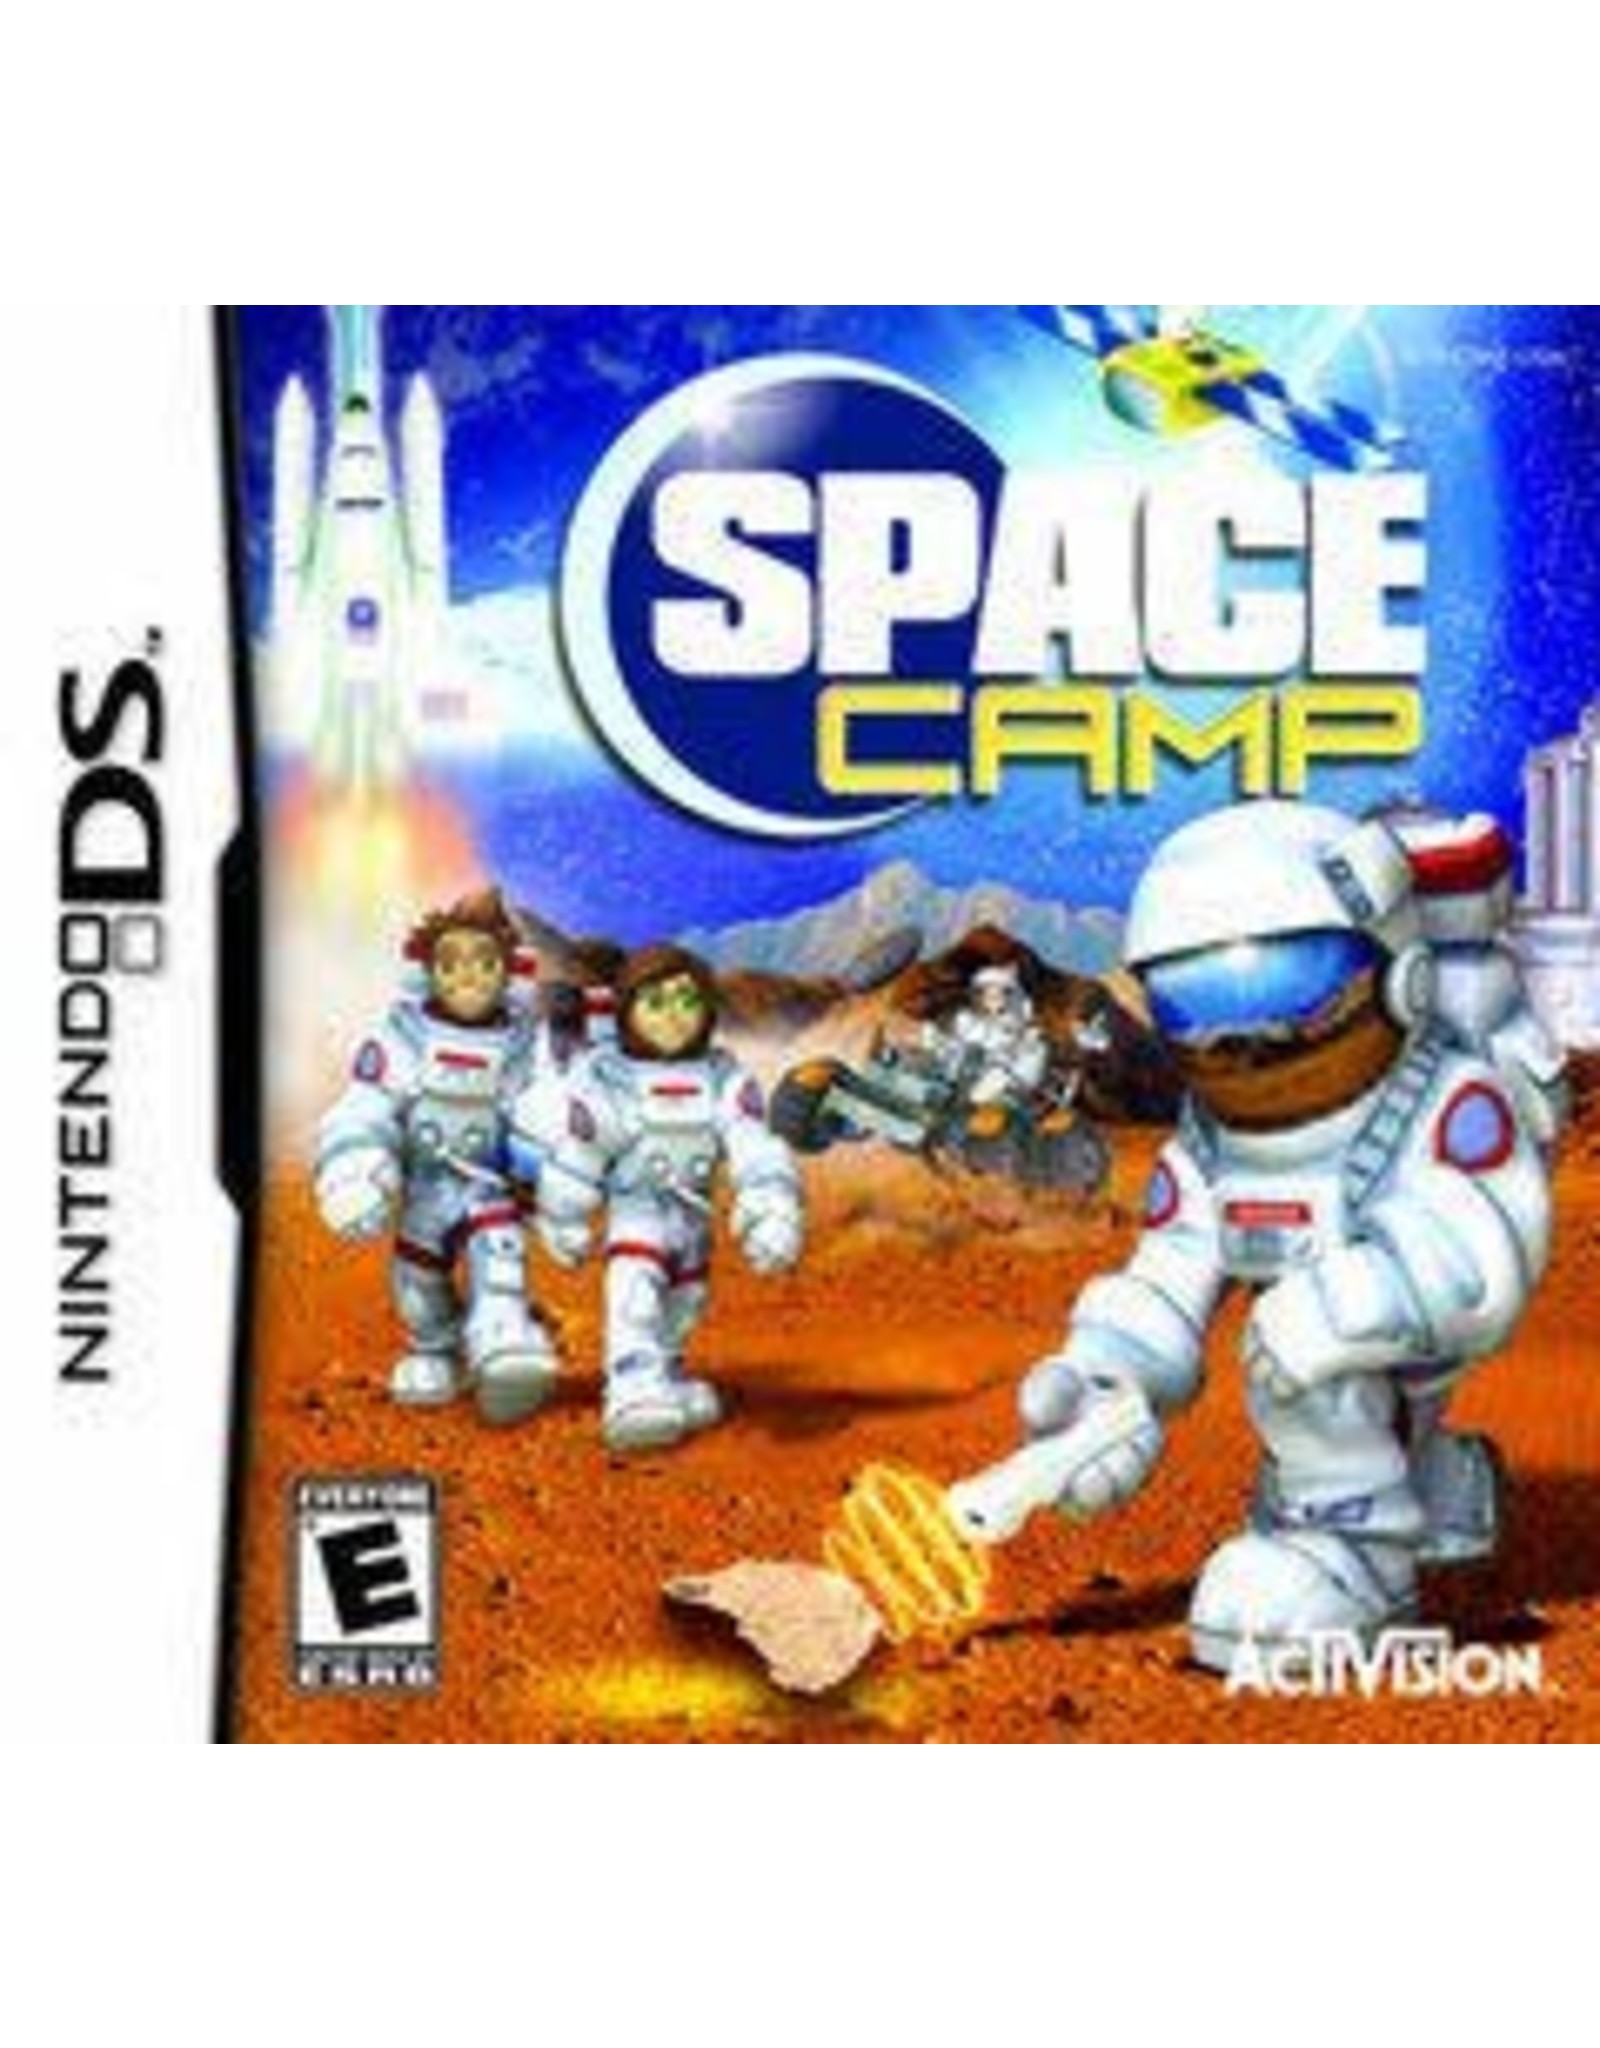 Nintendo DS Space Camp (CiB)